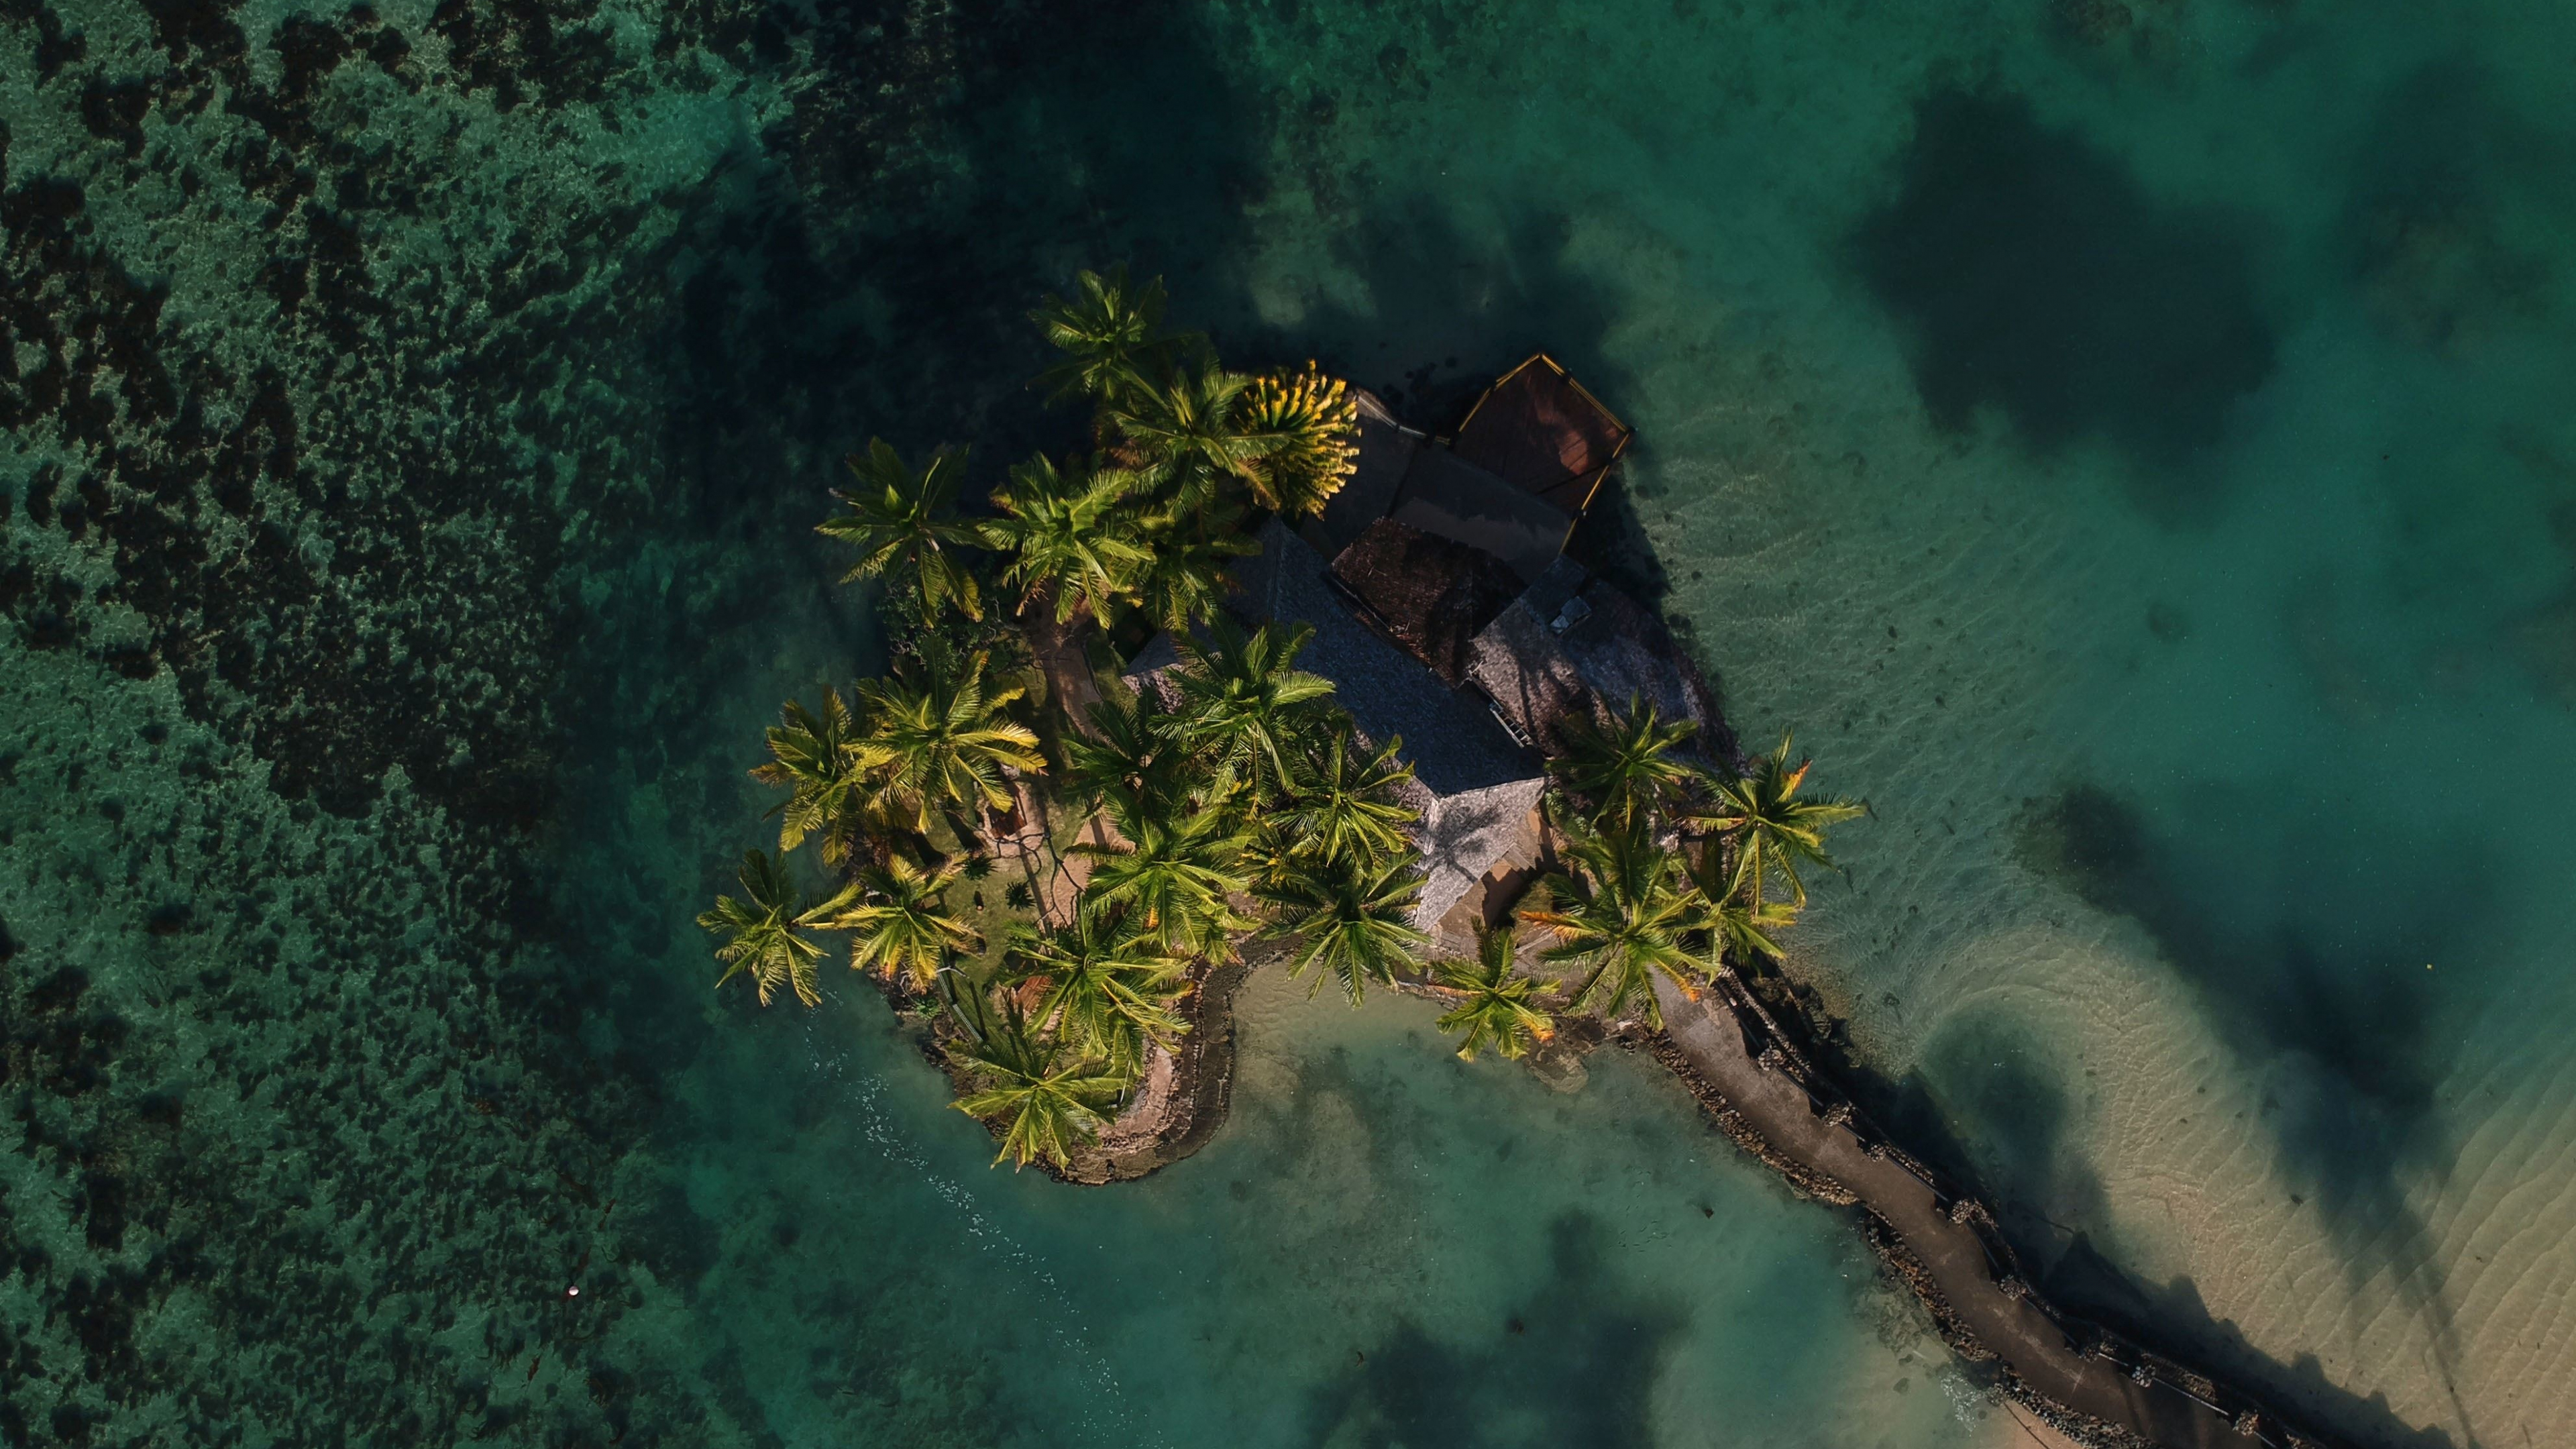 Download 3840x2160 warwick resort, fiji, sea, holiday, aerial view 4k wallpaper, uhd wallpaper, 16:9 widescreen wallpaper, 3840x2160 HD image, background, 9936